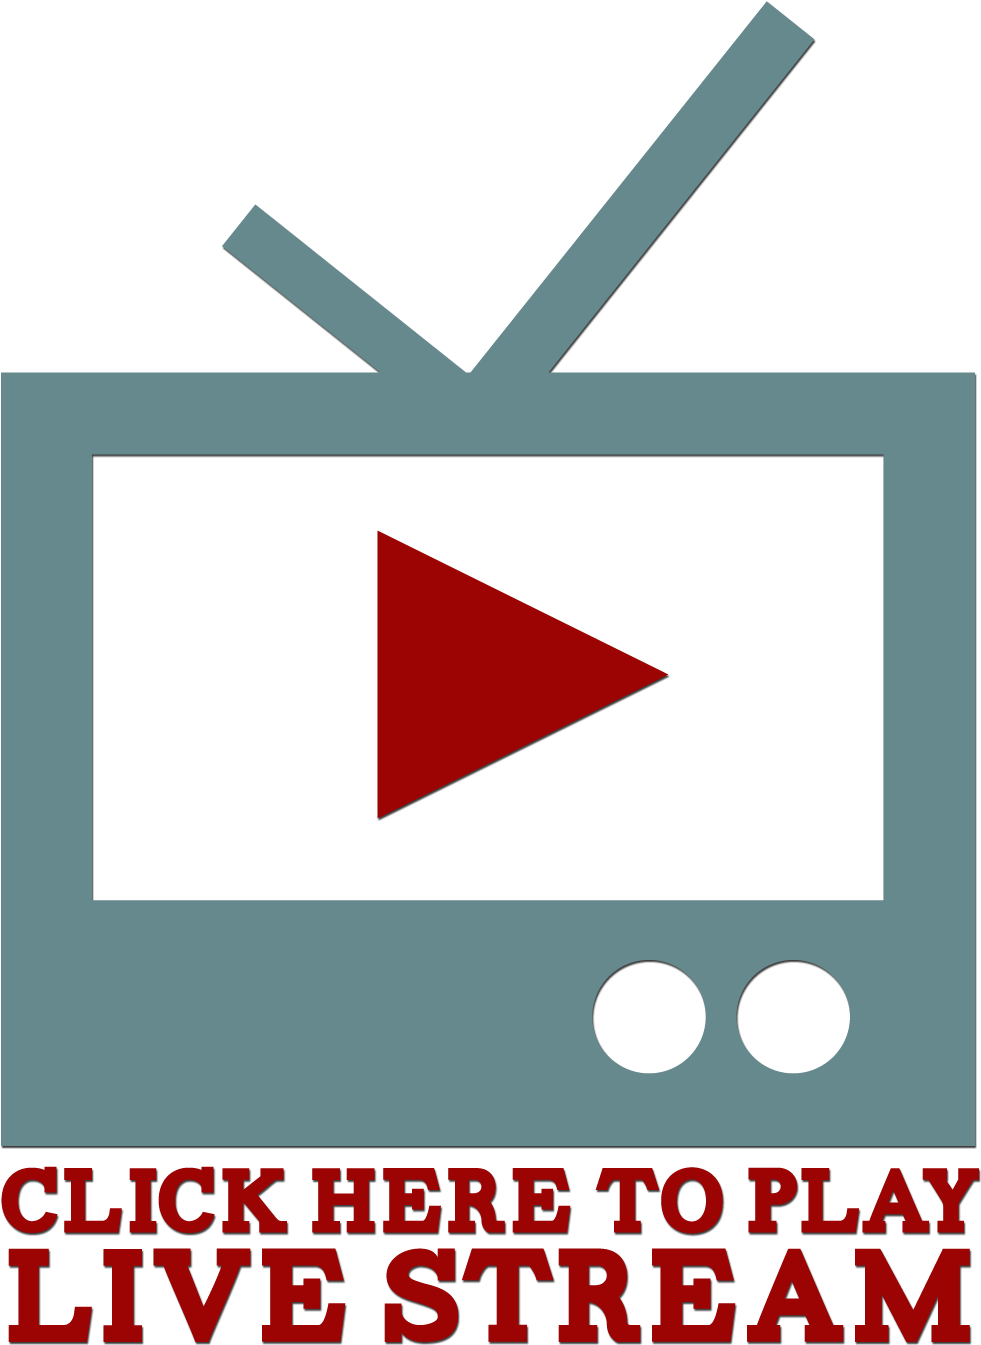 Brazil Vs Croatia Live Streaming Online - Live Stream Button (1200x1500)